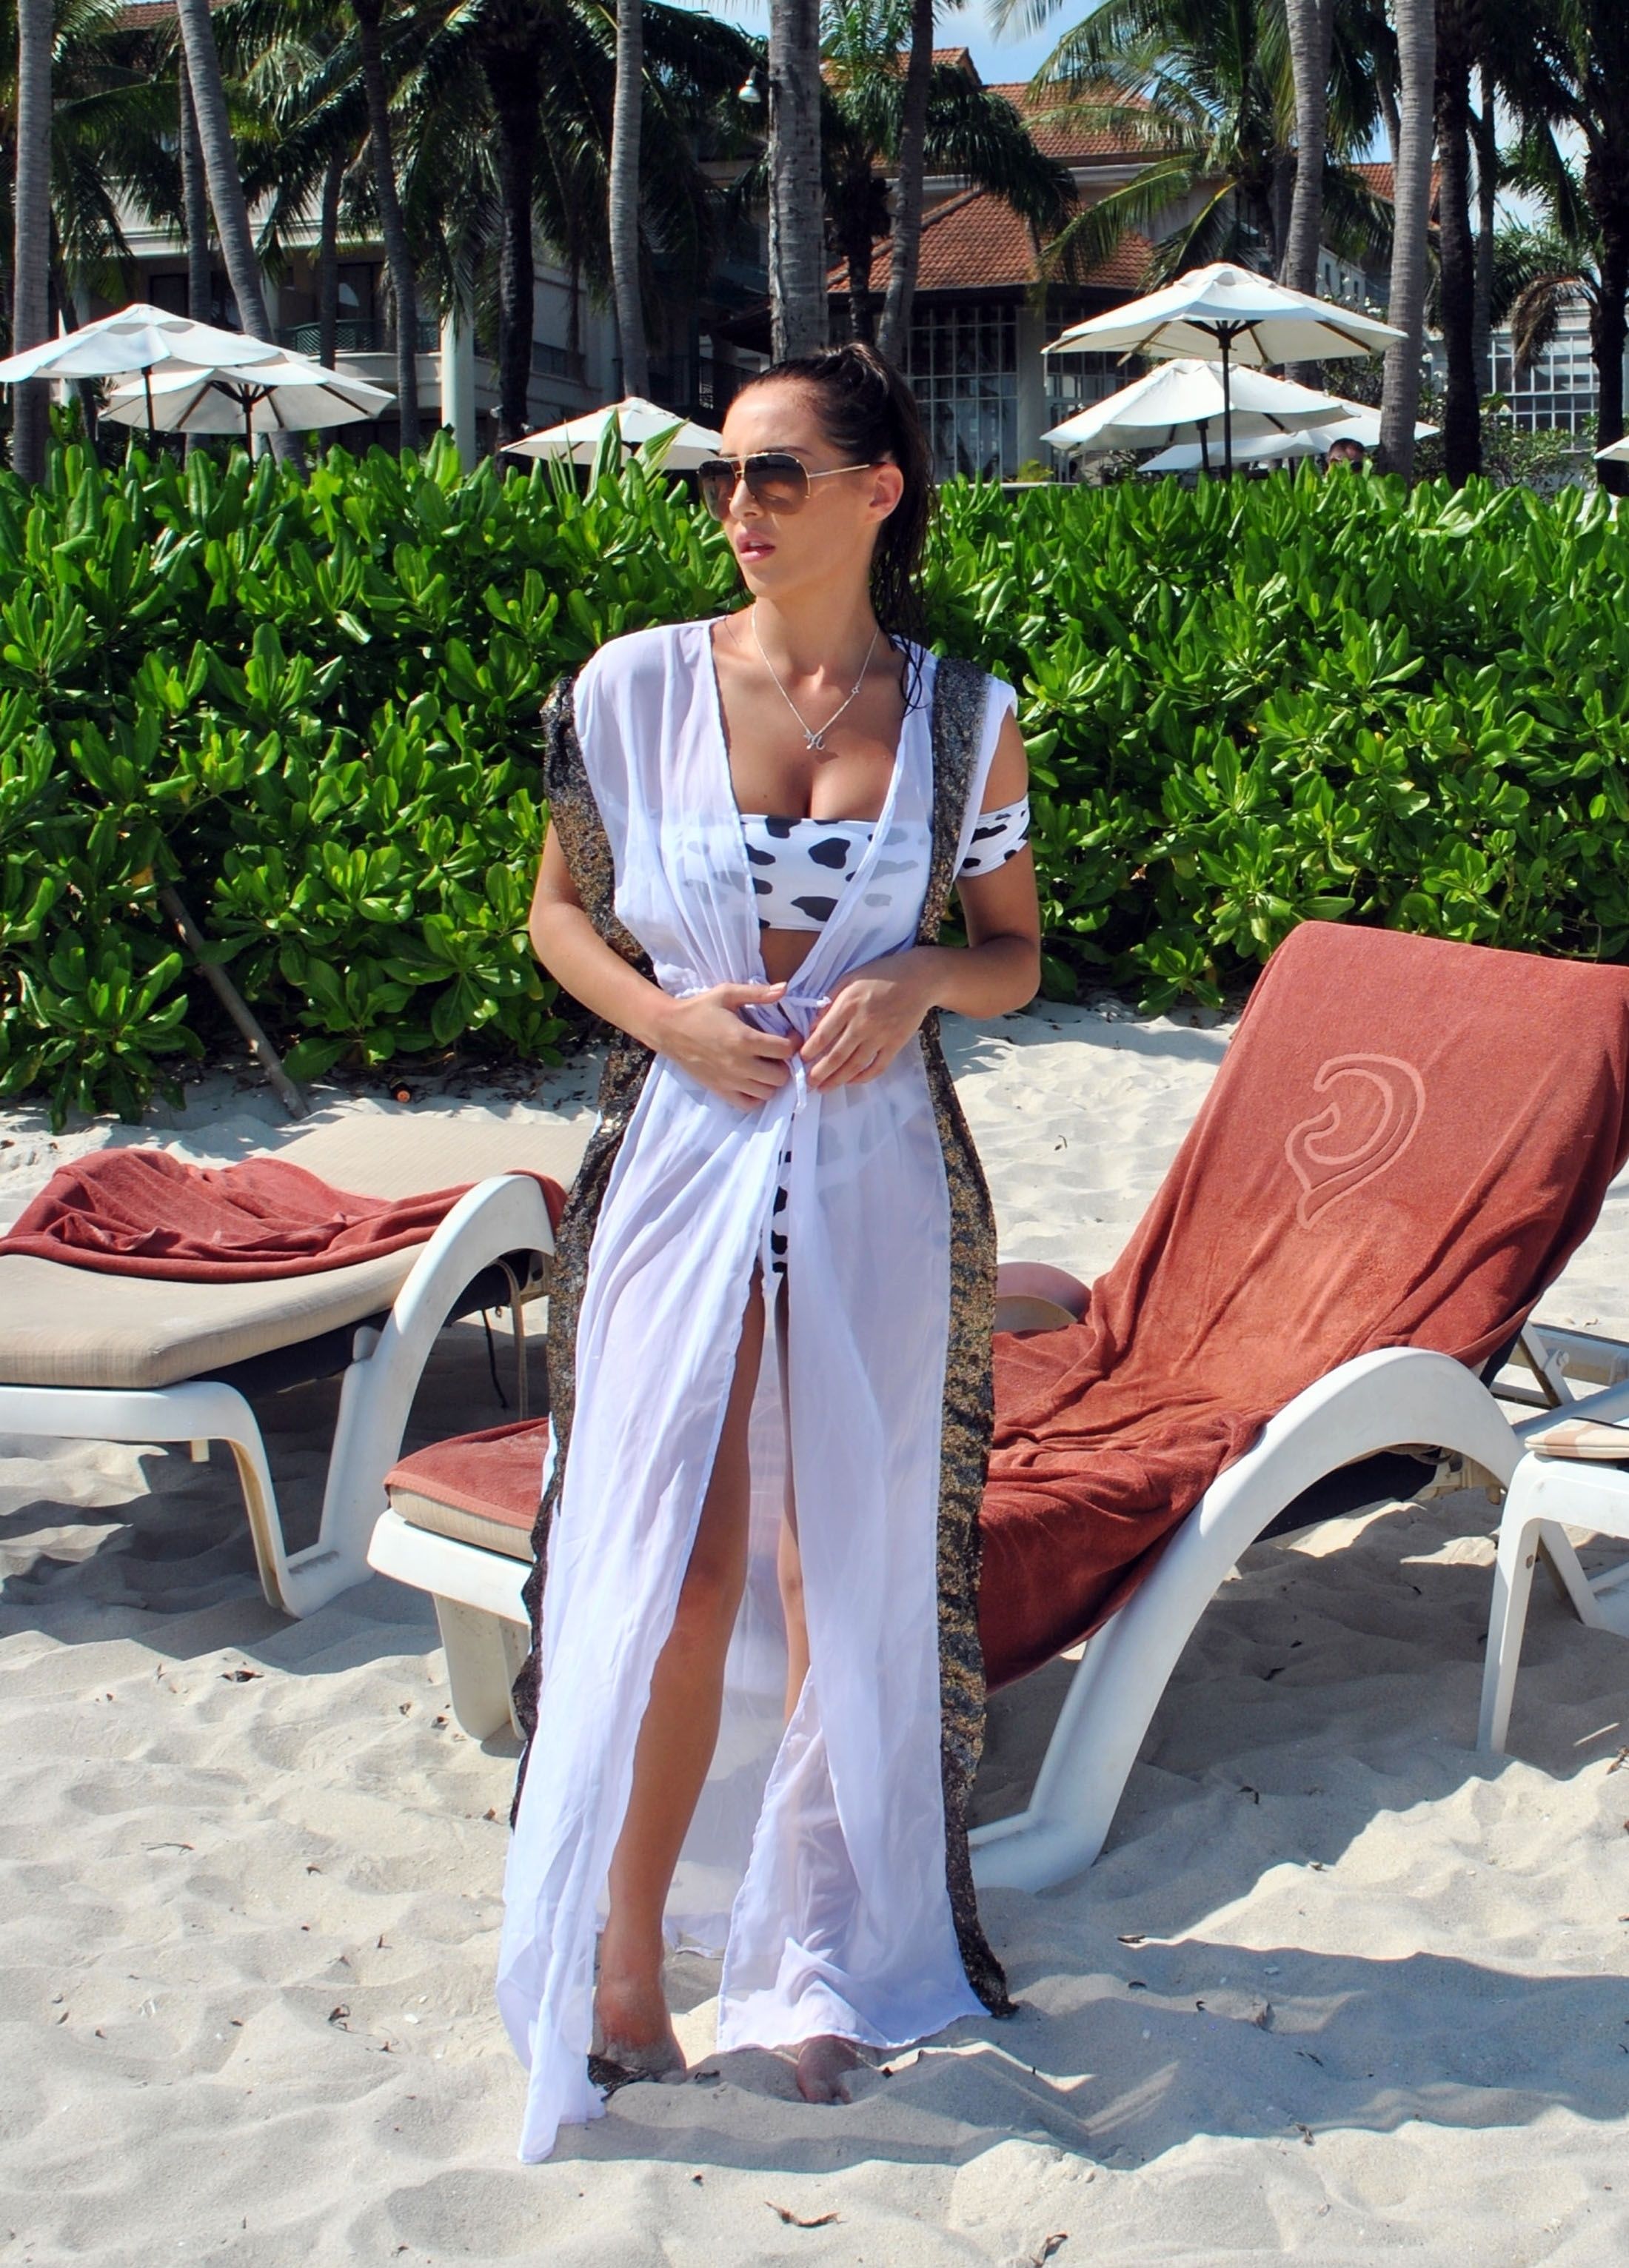 Bikini Clad Beauty Chloe Goodman Showing Her Body On A Thai Beach The